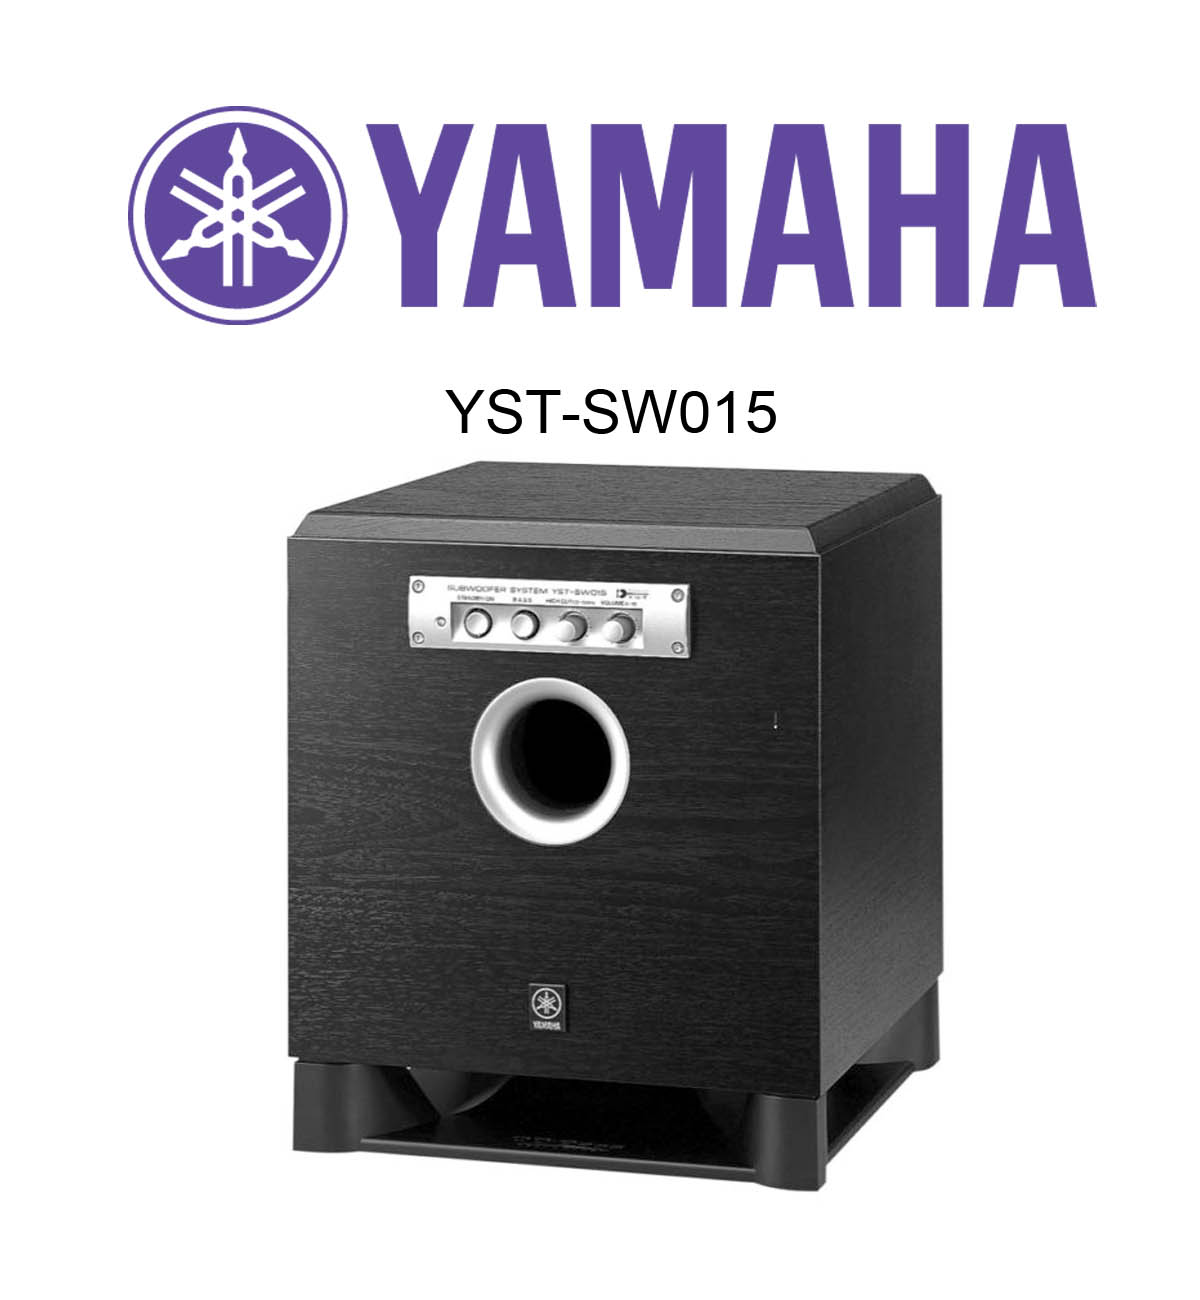 Yamaha YST-SW015 Subwoofer im Test | Sounds24.com - Aktuelle Tests zu